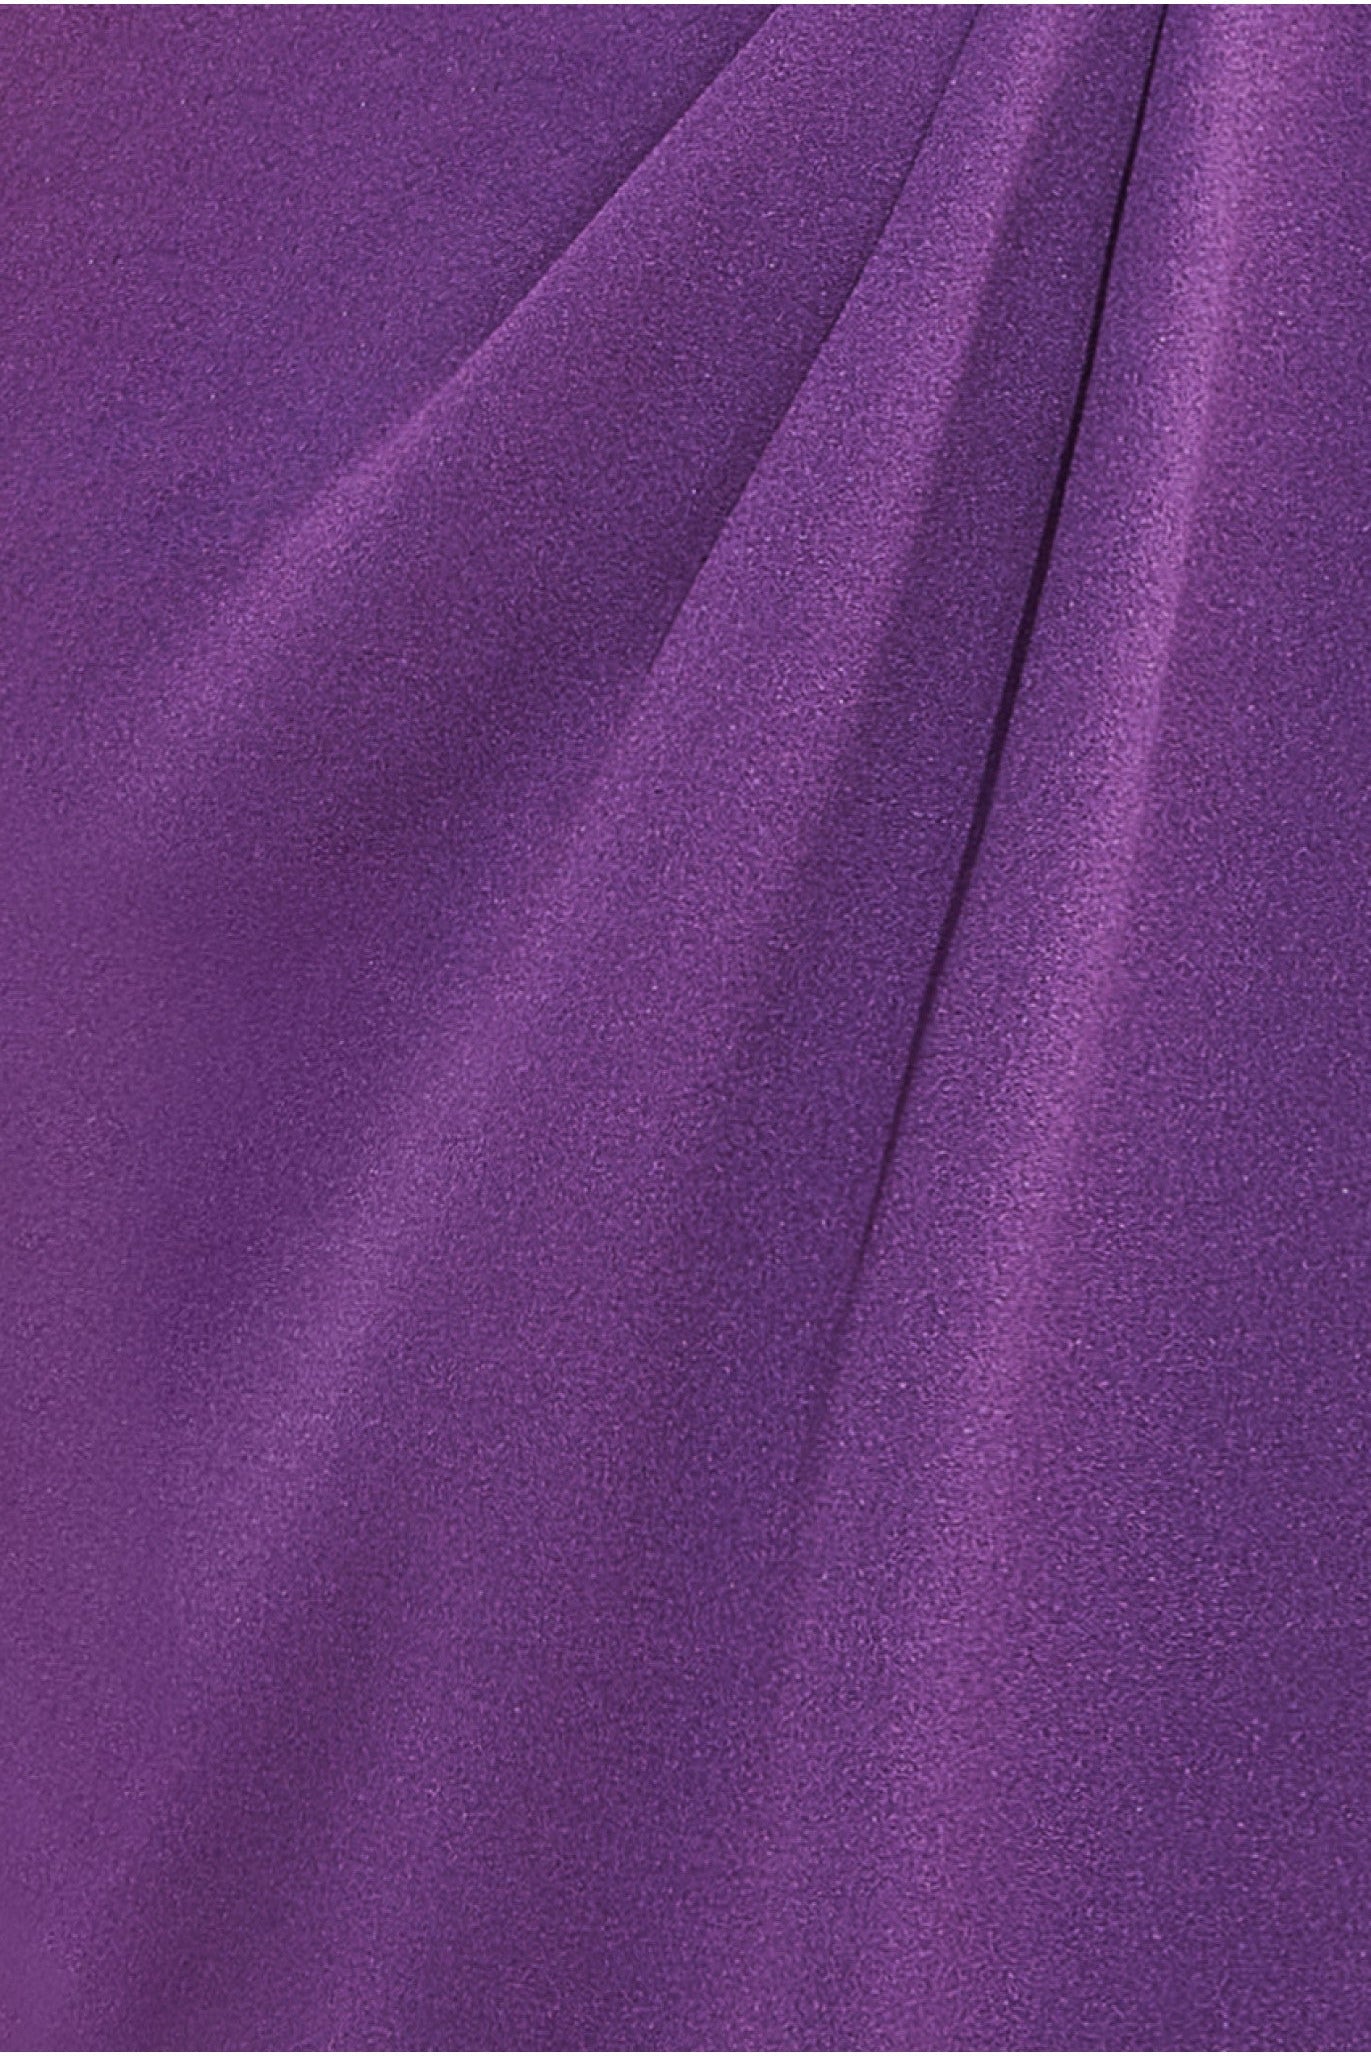 Scuba Bardot Wrap Maxi Dress - Purple DR3842